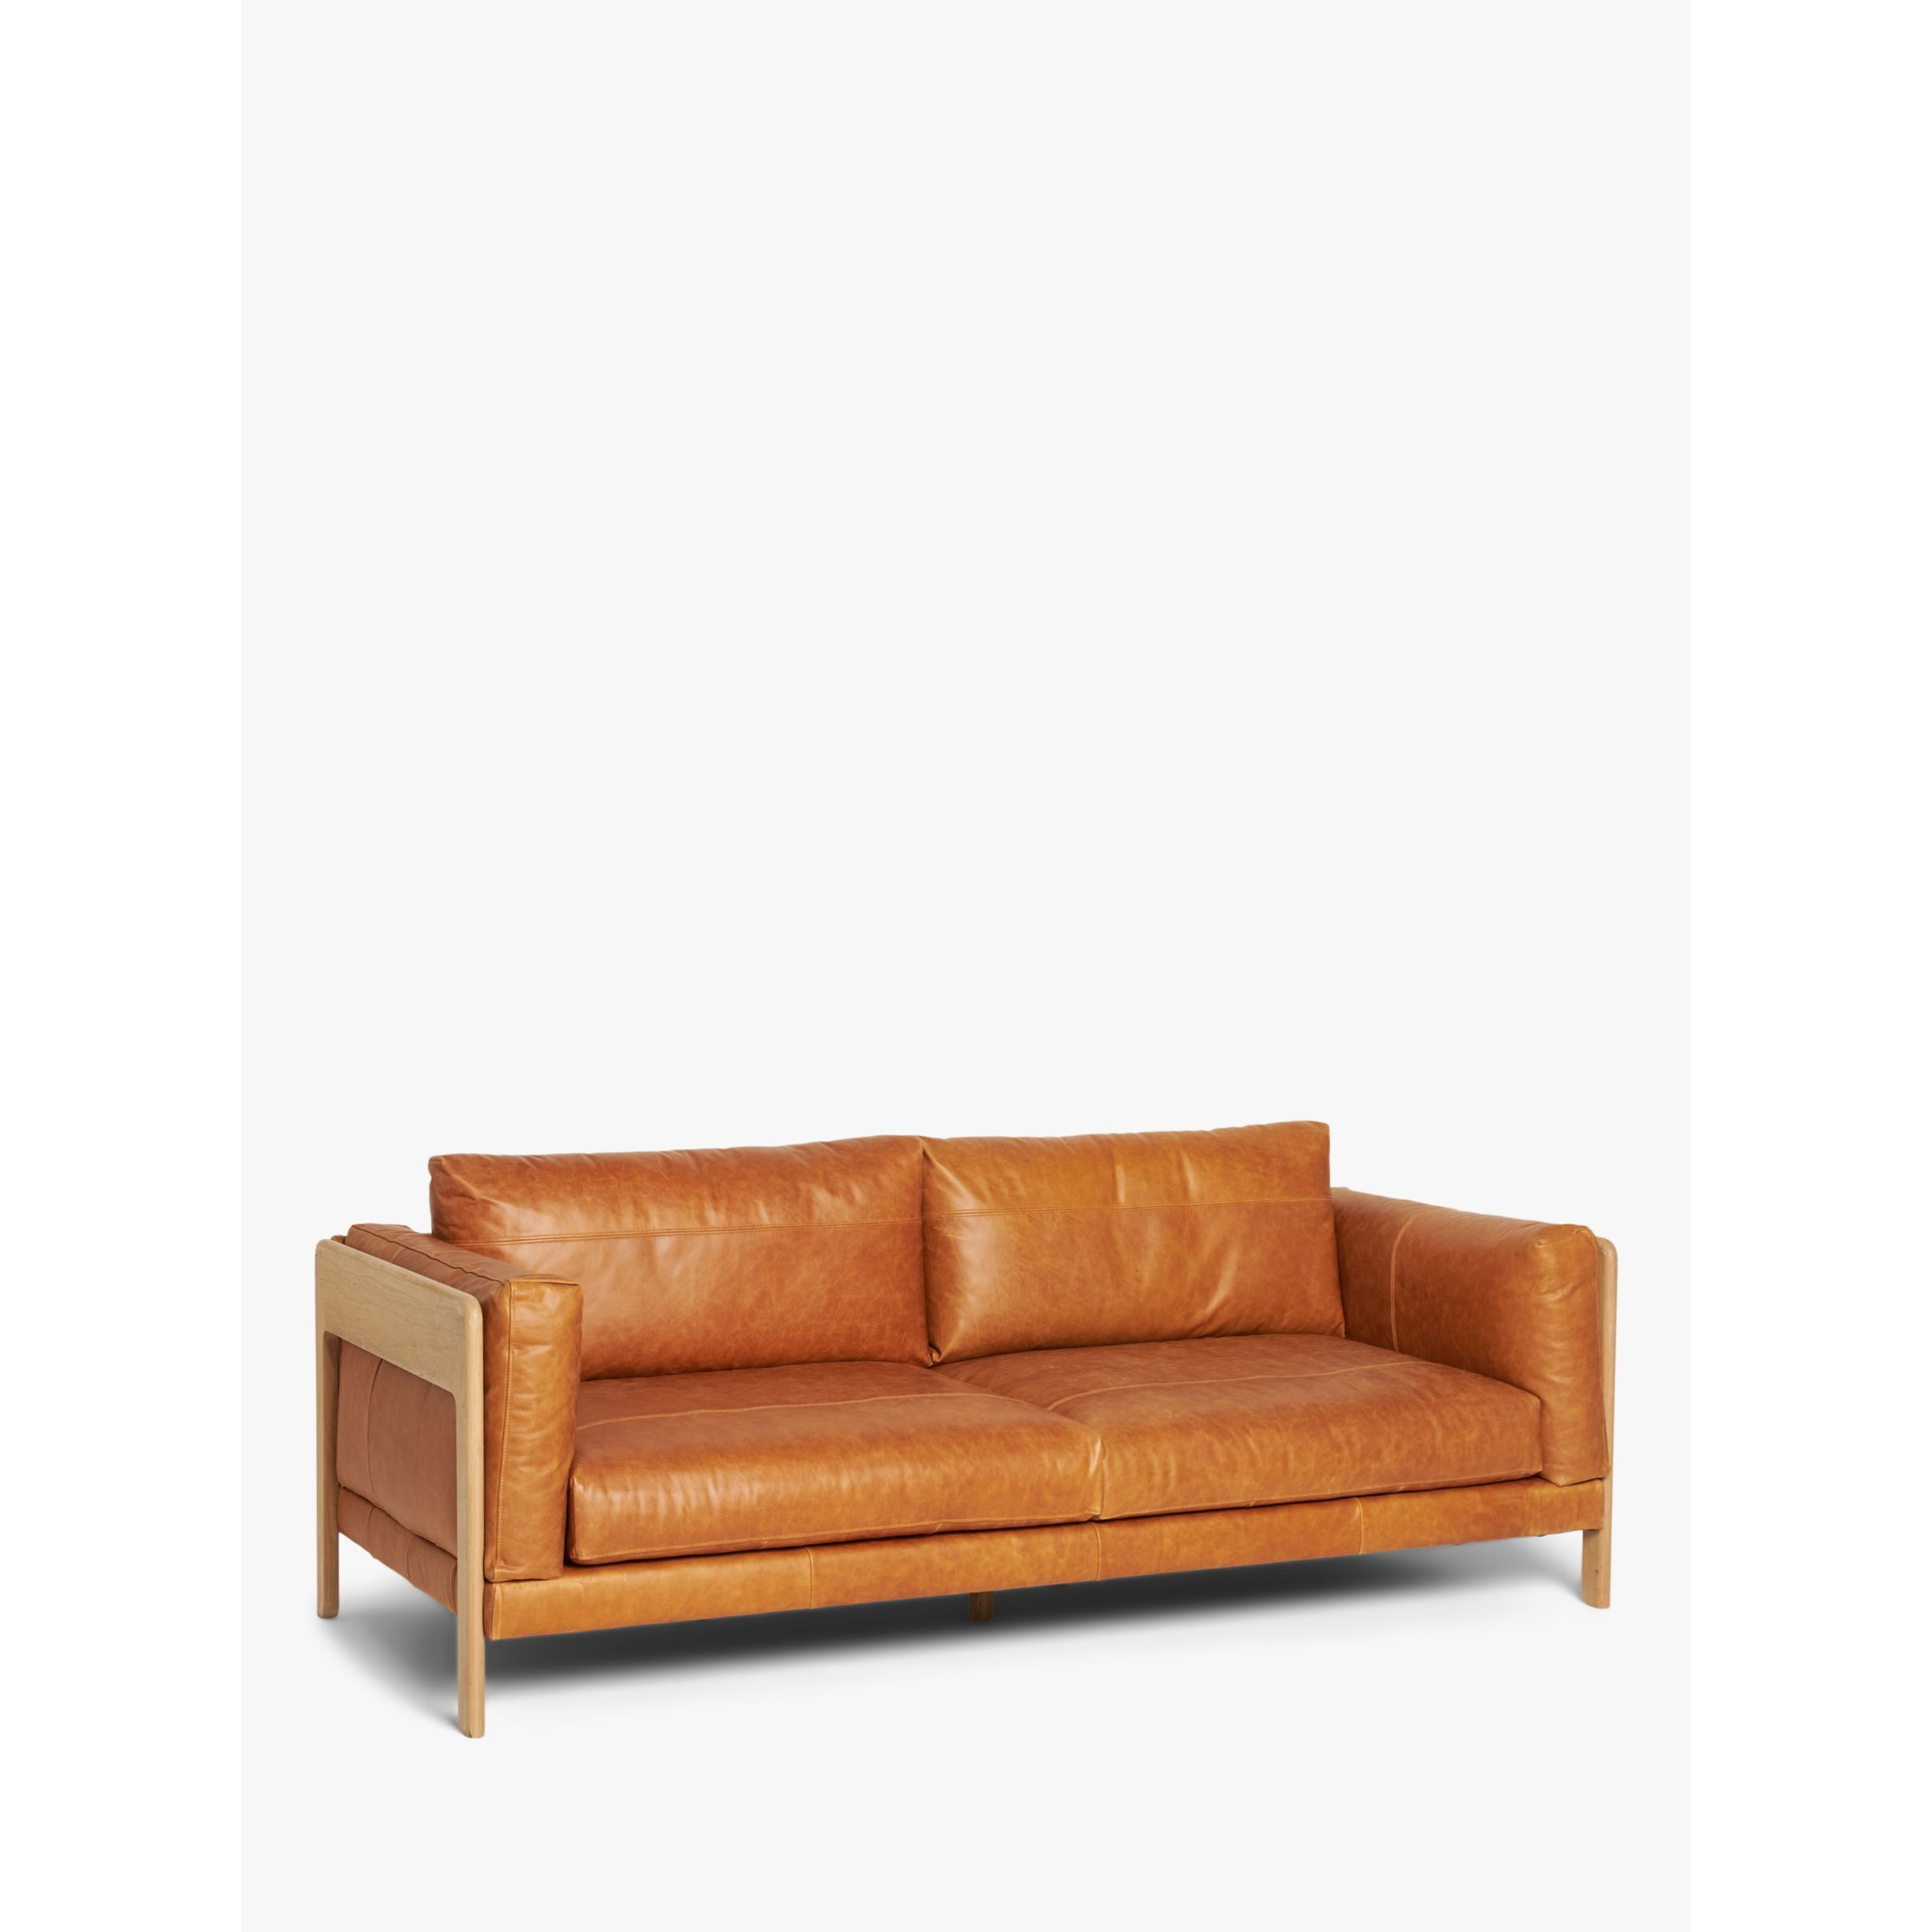 John Lewis Nest Grand 4 Seater Leather Sofa, Light Leg, Butterscotch Leather - image 1